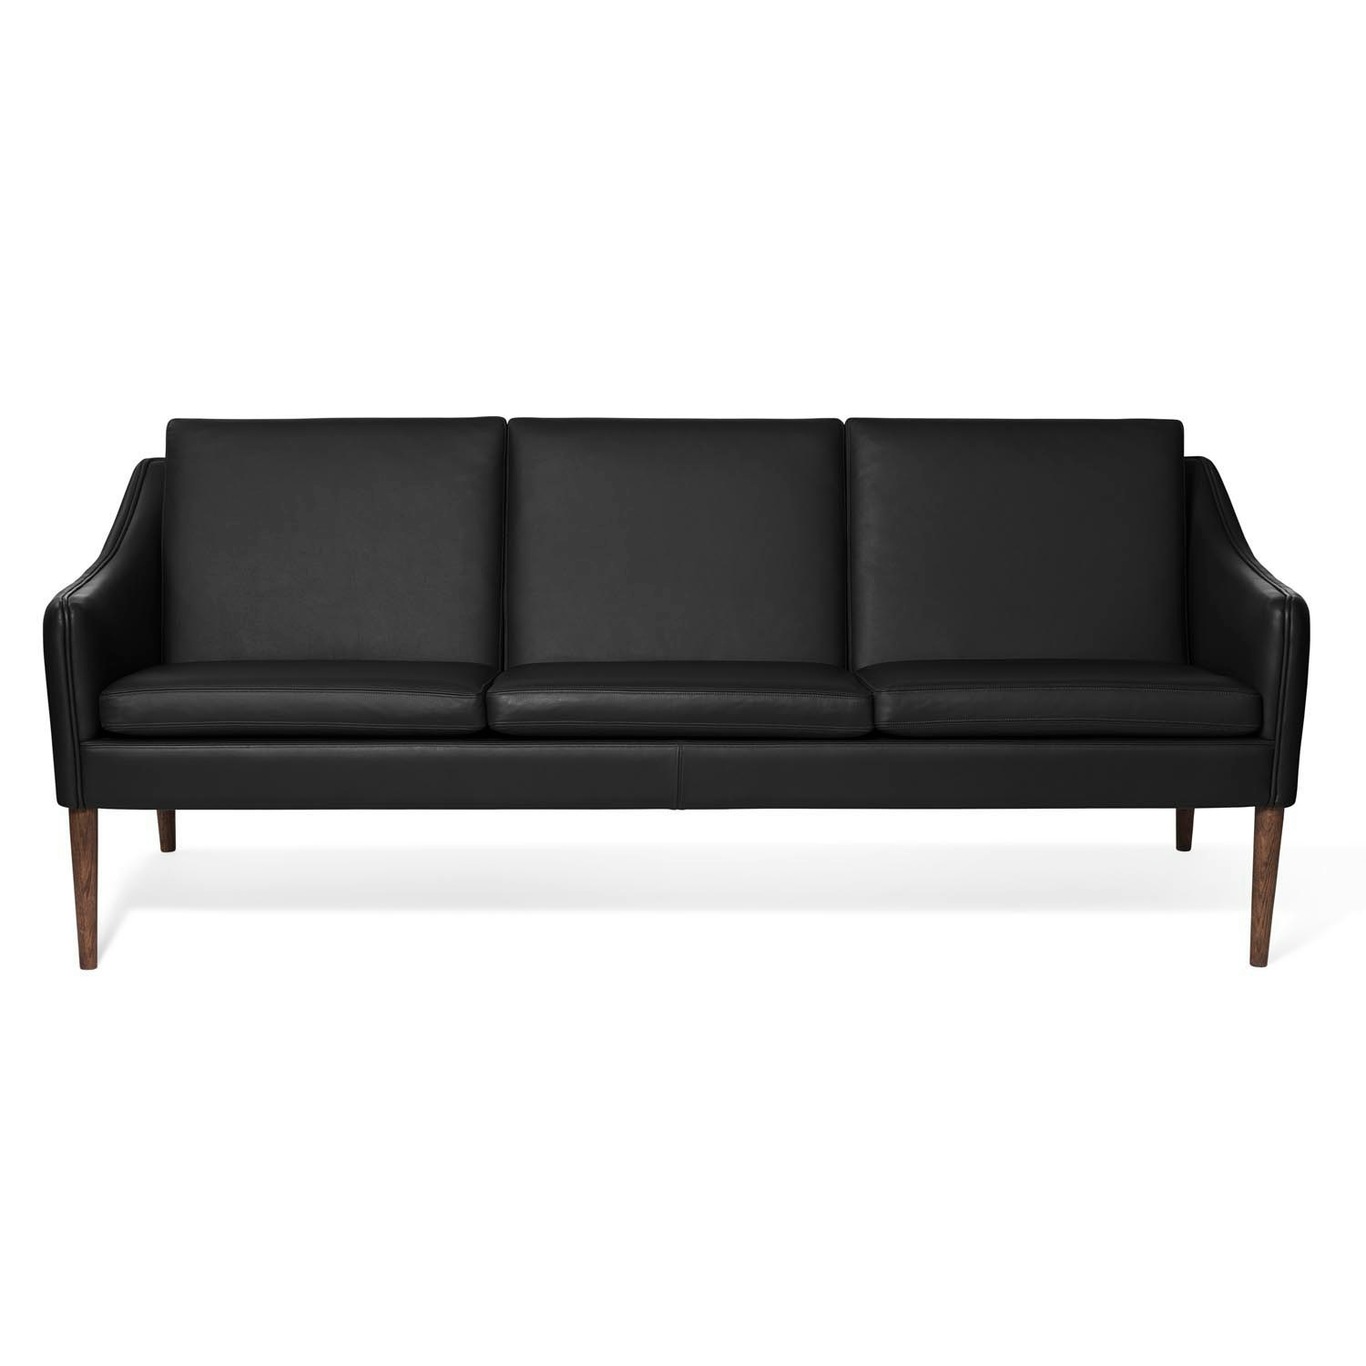 Mr. Olsen 3-Seater Sofa, Black / Smoked Oak